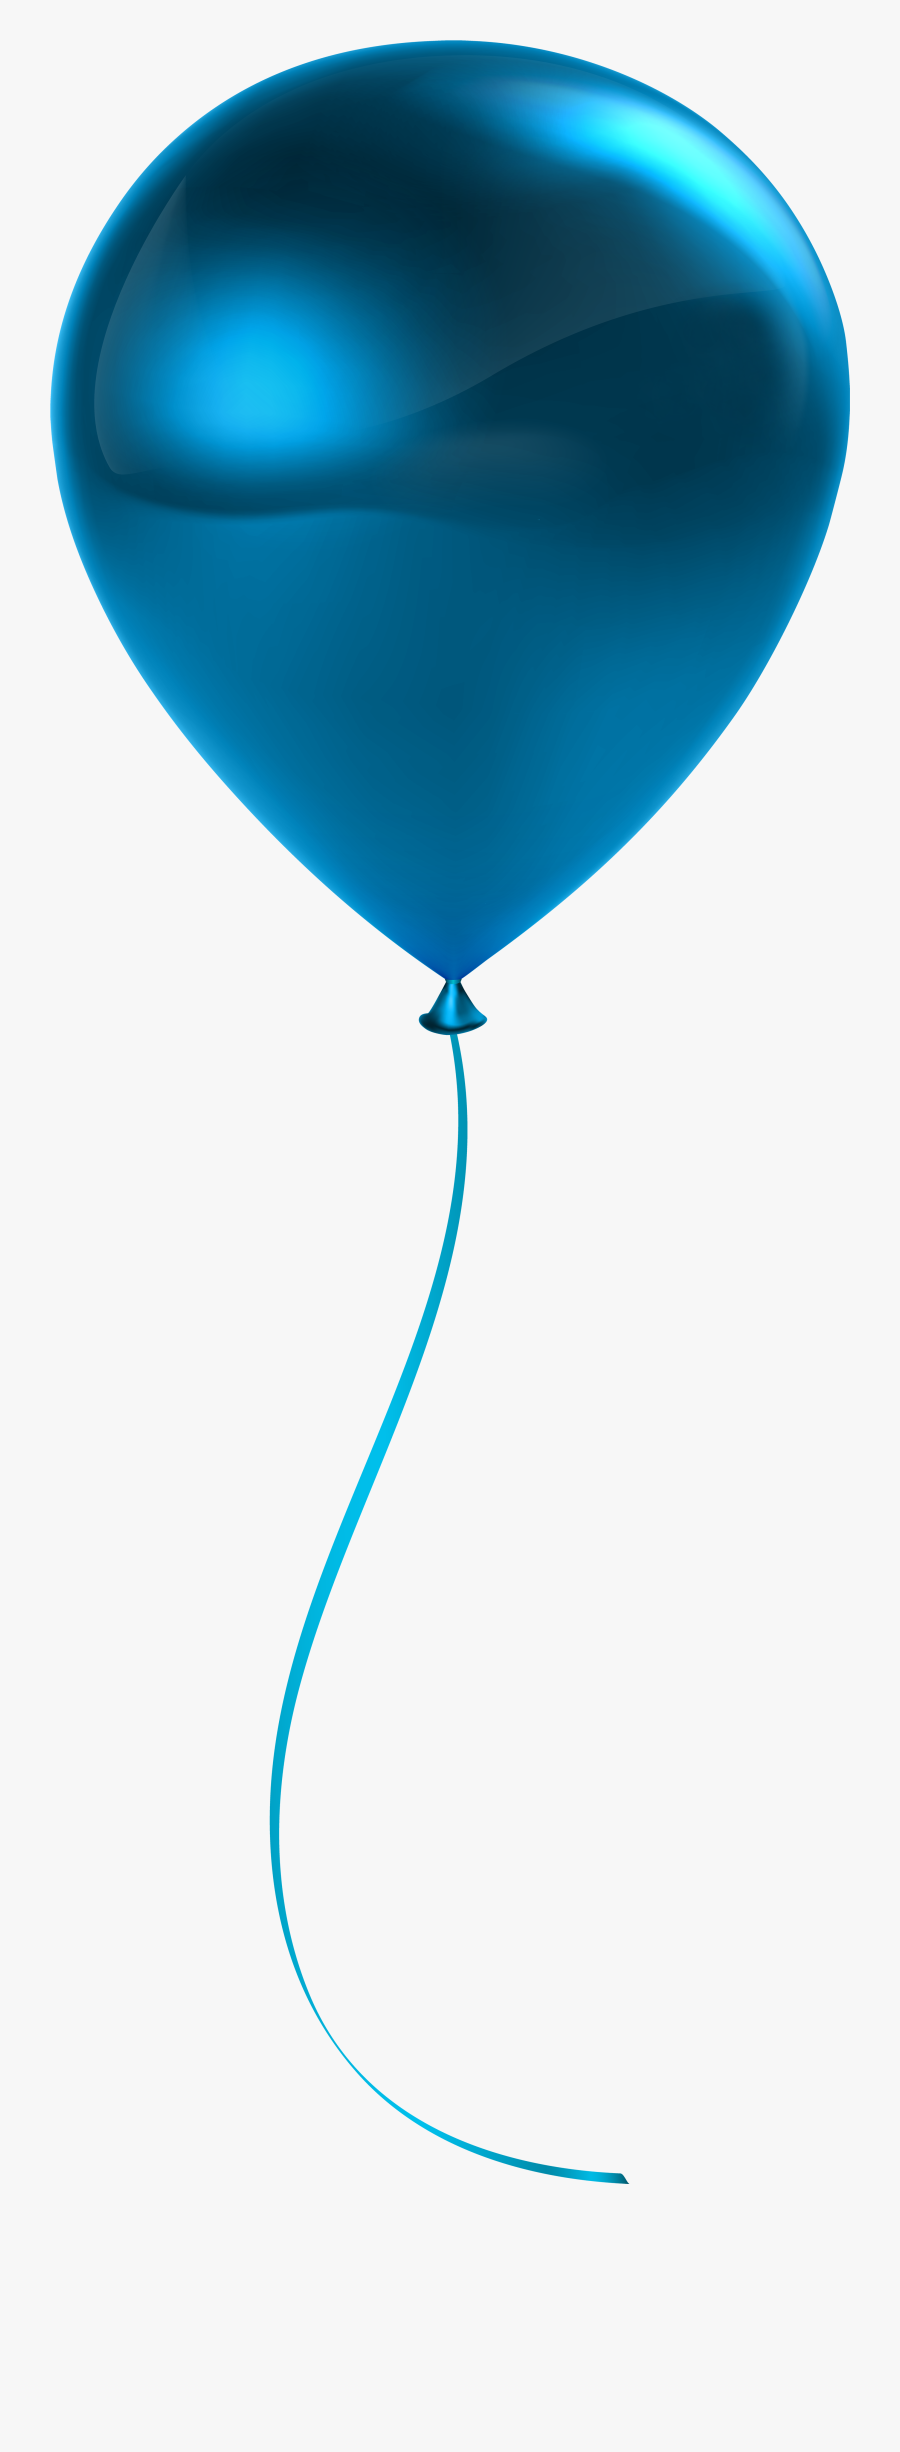 Balloons Clipart Teal - Blue Balloon Transparent Background, Transparent Clipart